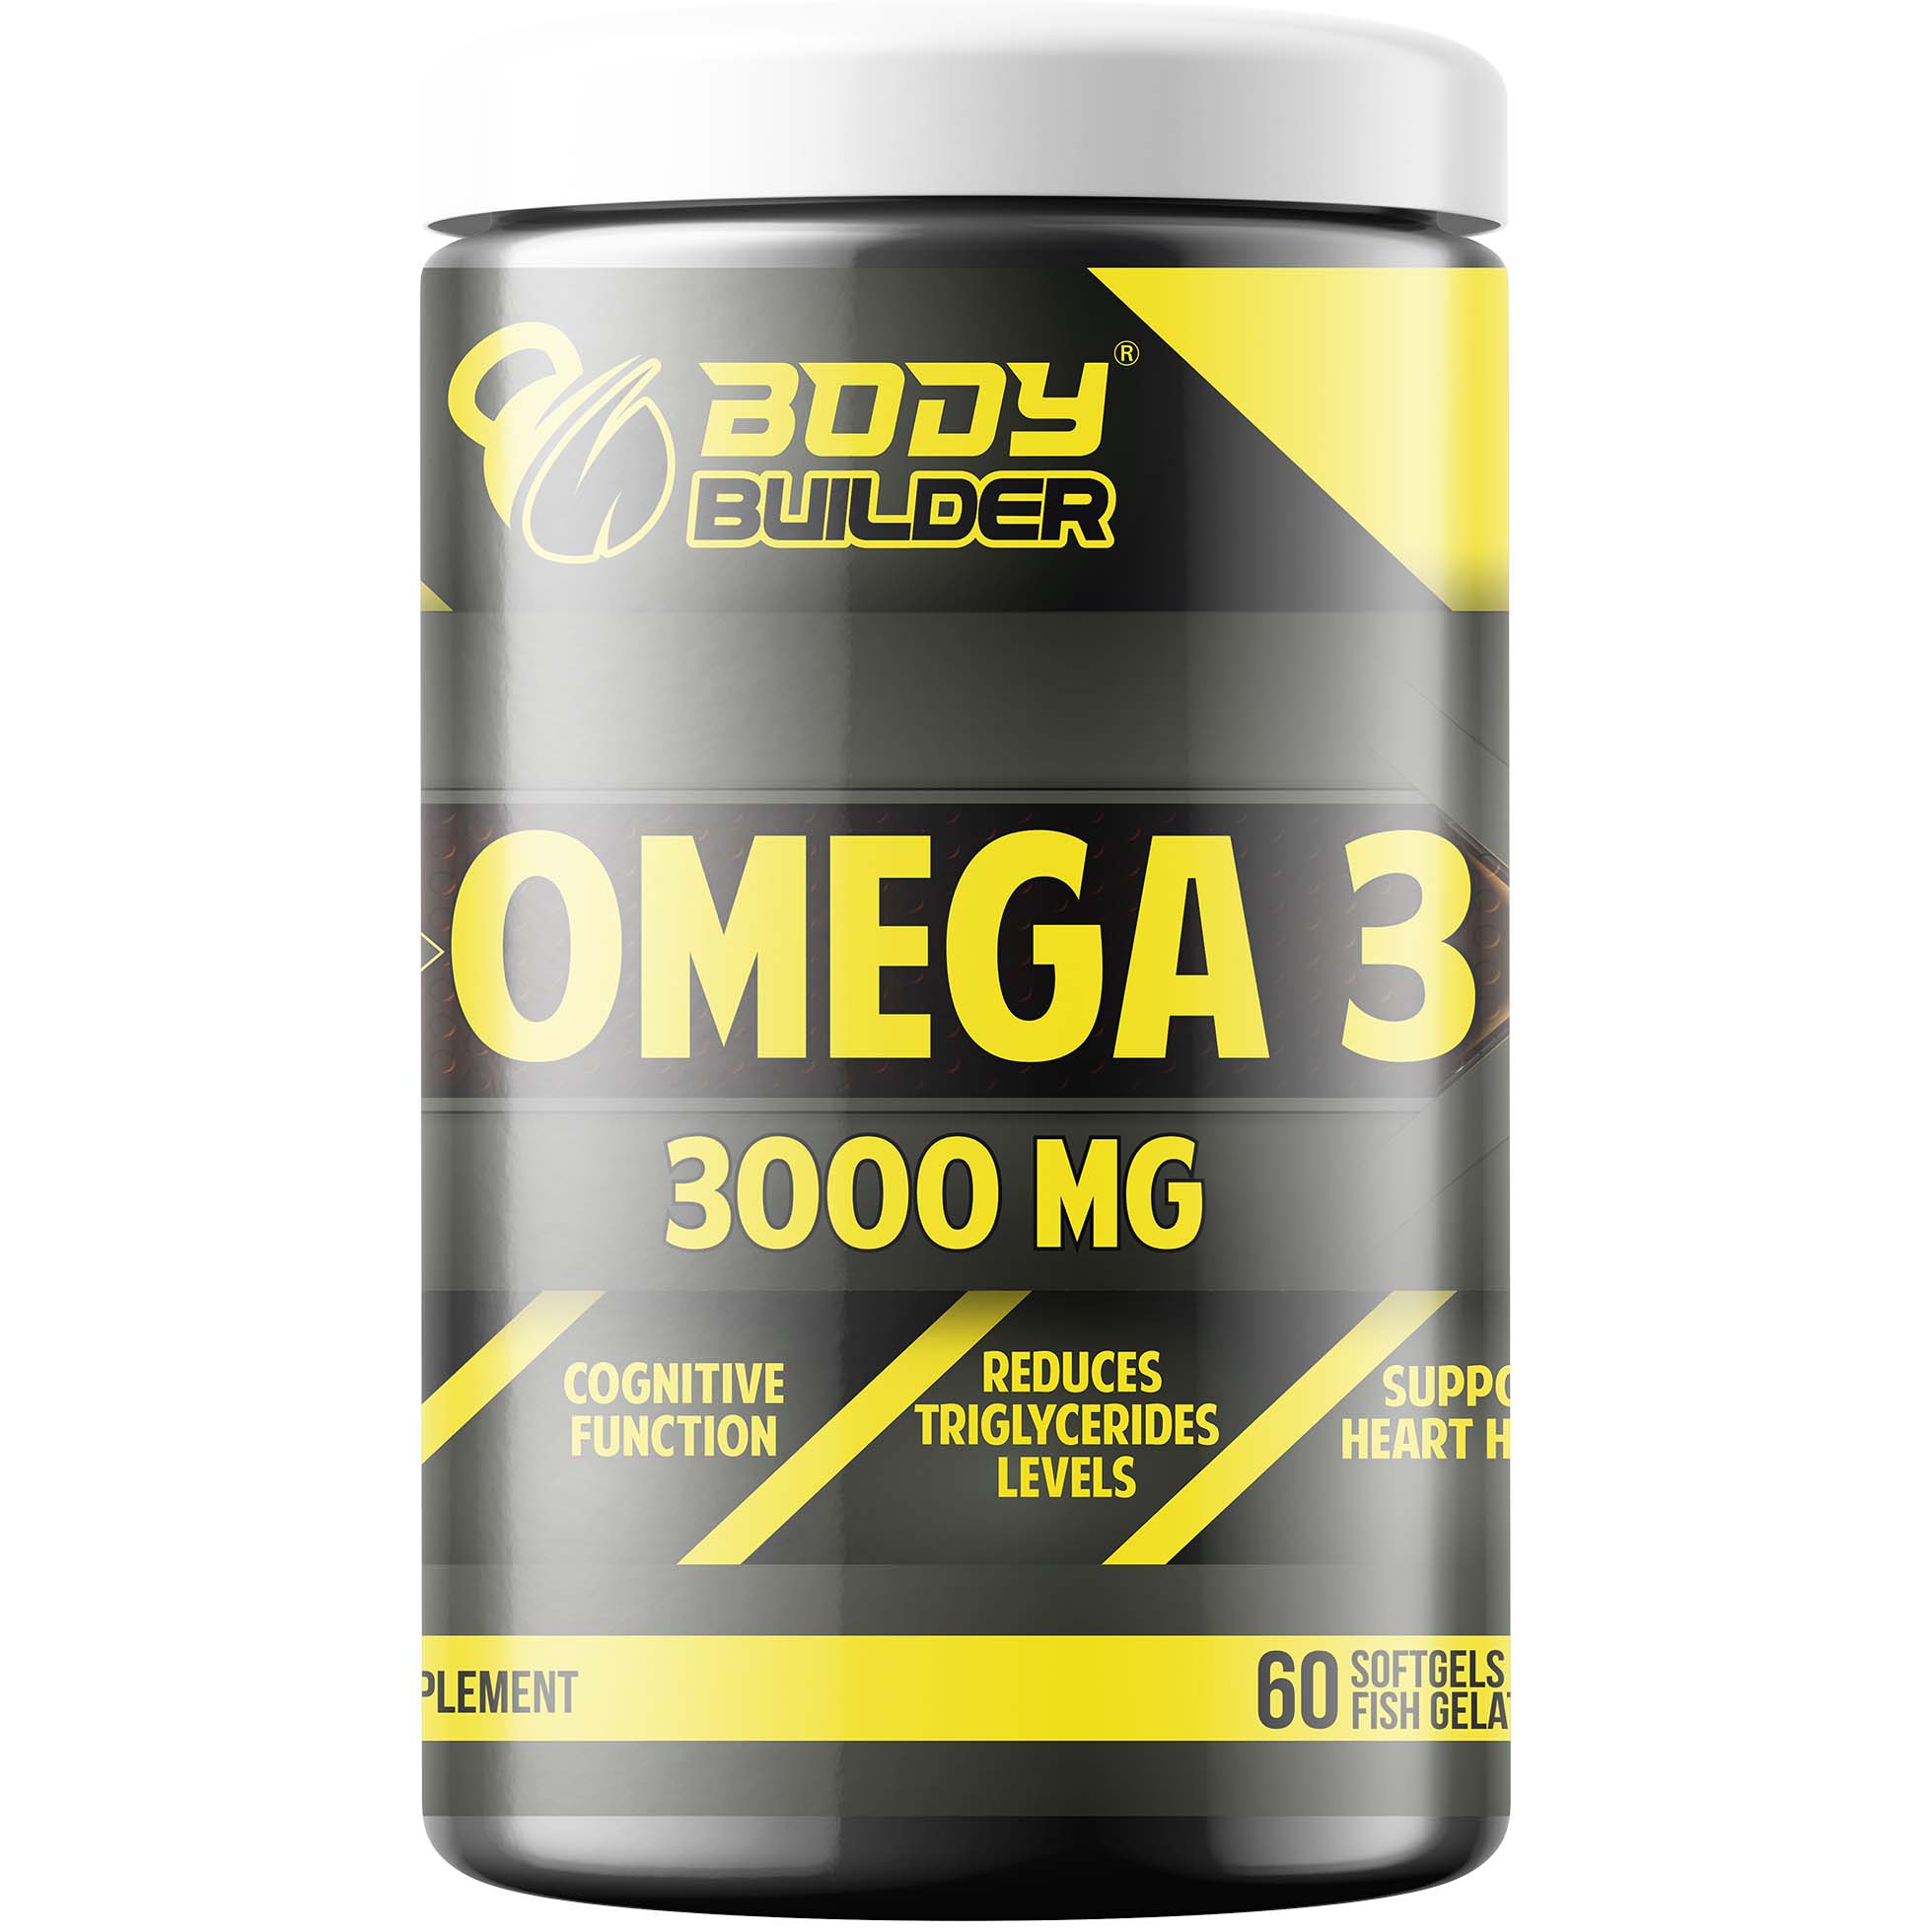 Body Builder Omega-3, 60 Softgels, 3000 mg